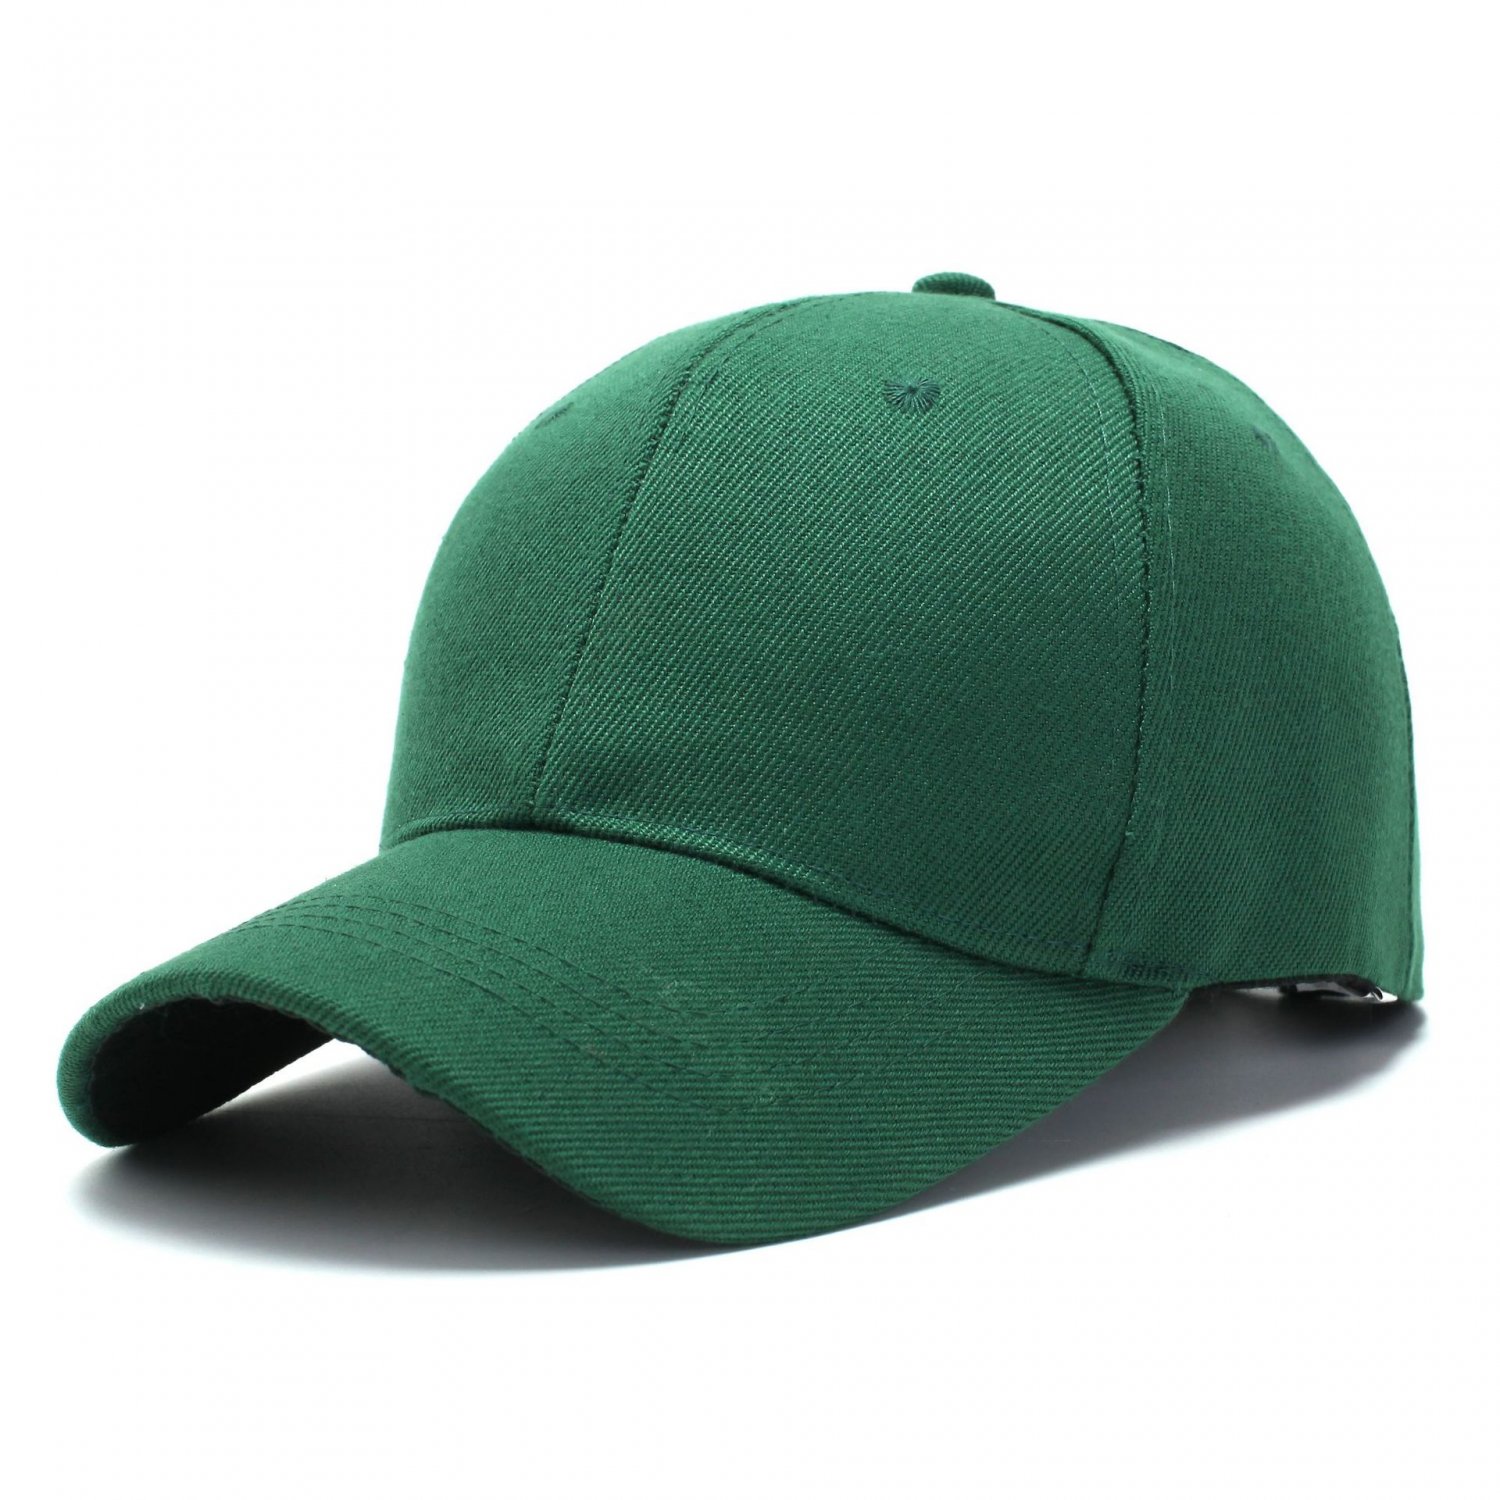 Unisex Sun Visor Cap Outdoor Dustproof Baseball Cap Fashion Adjustable Green Cap